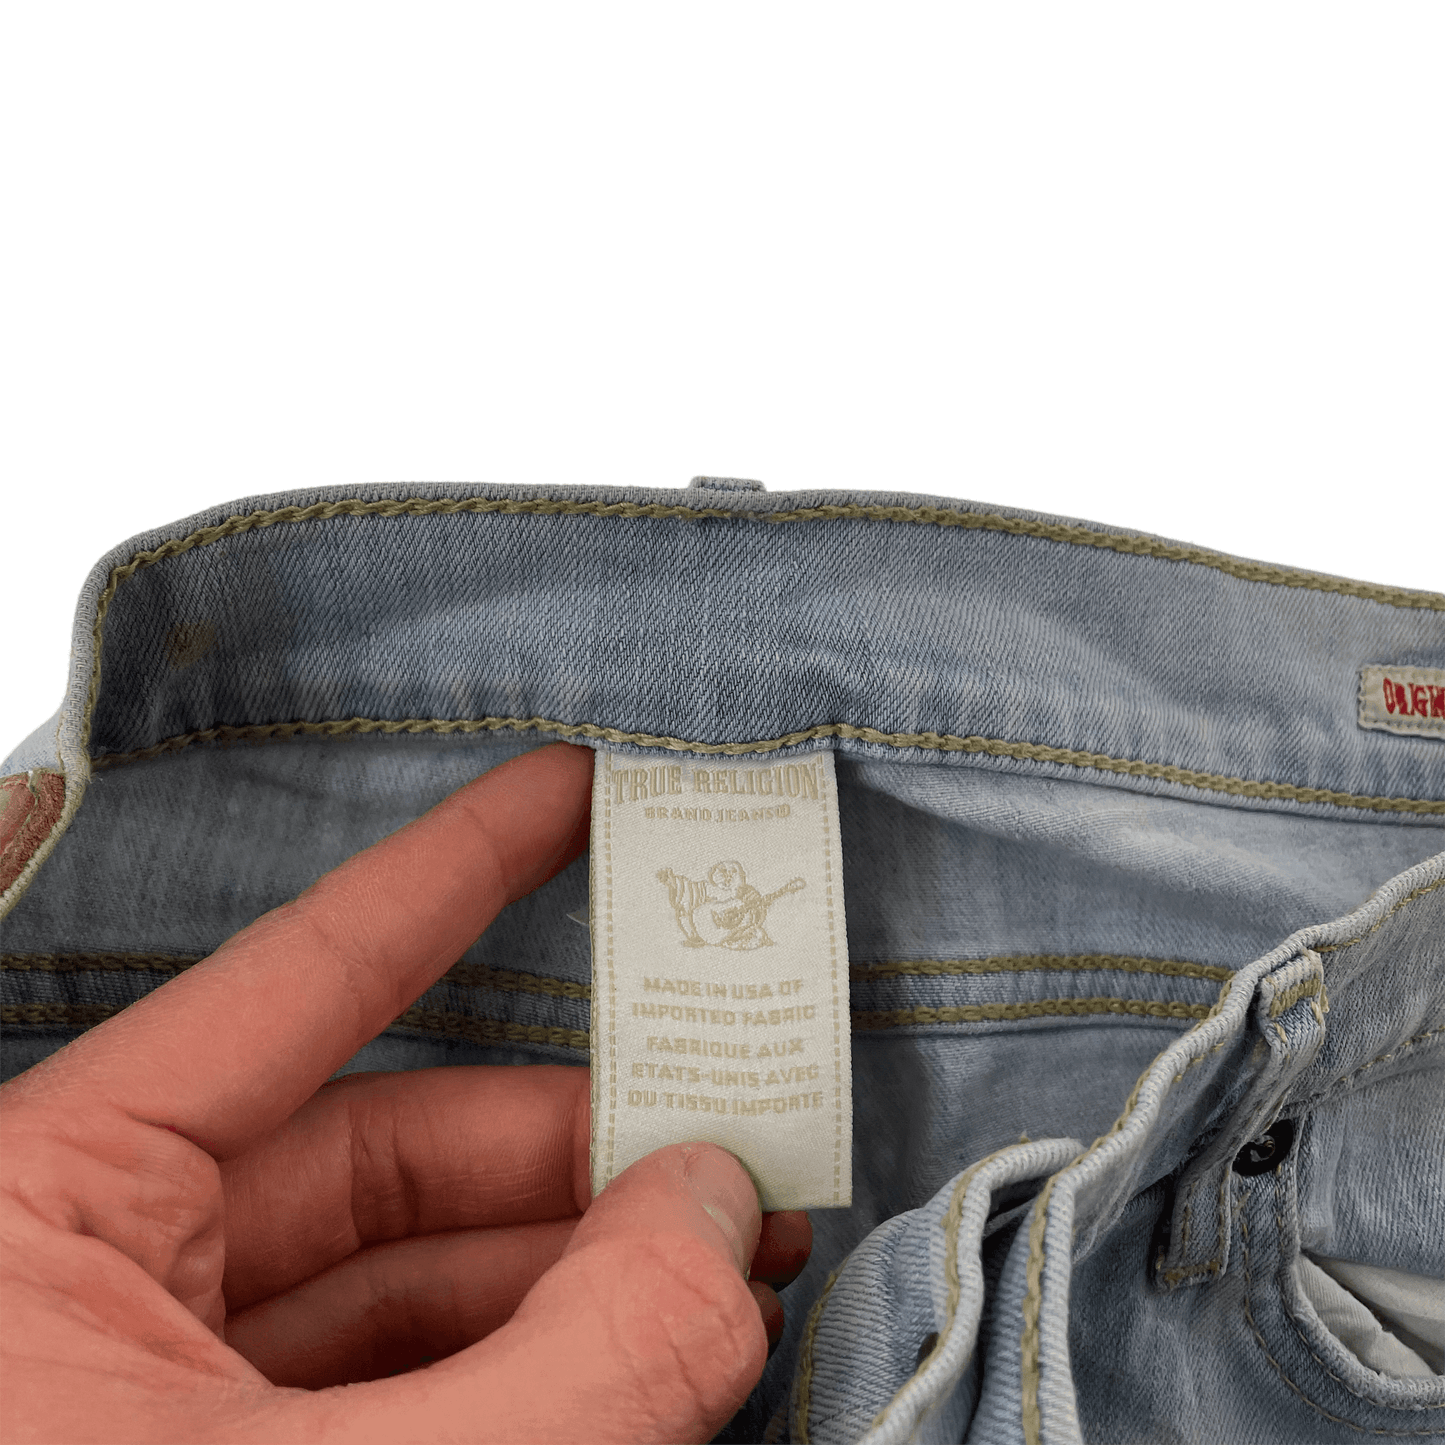 True religion big stitch jeans trousers W29 - Known Source